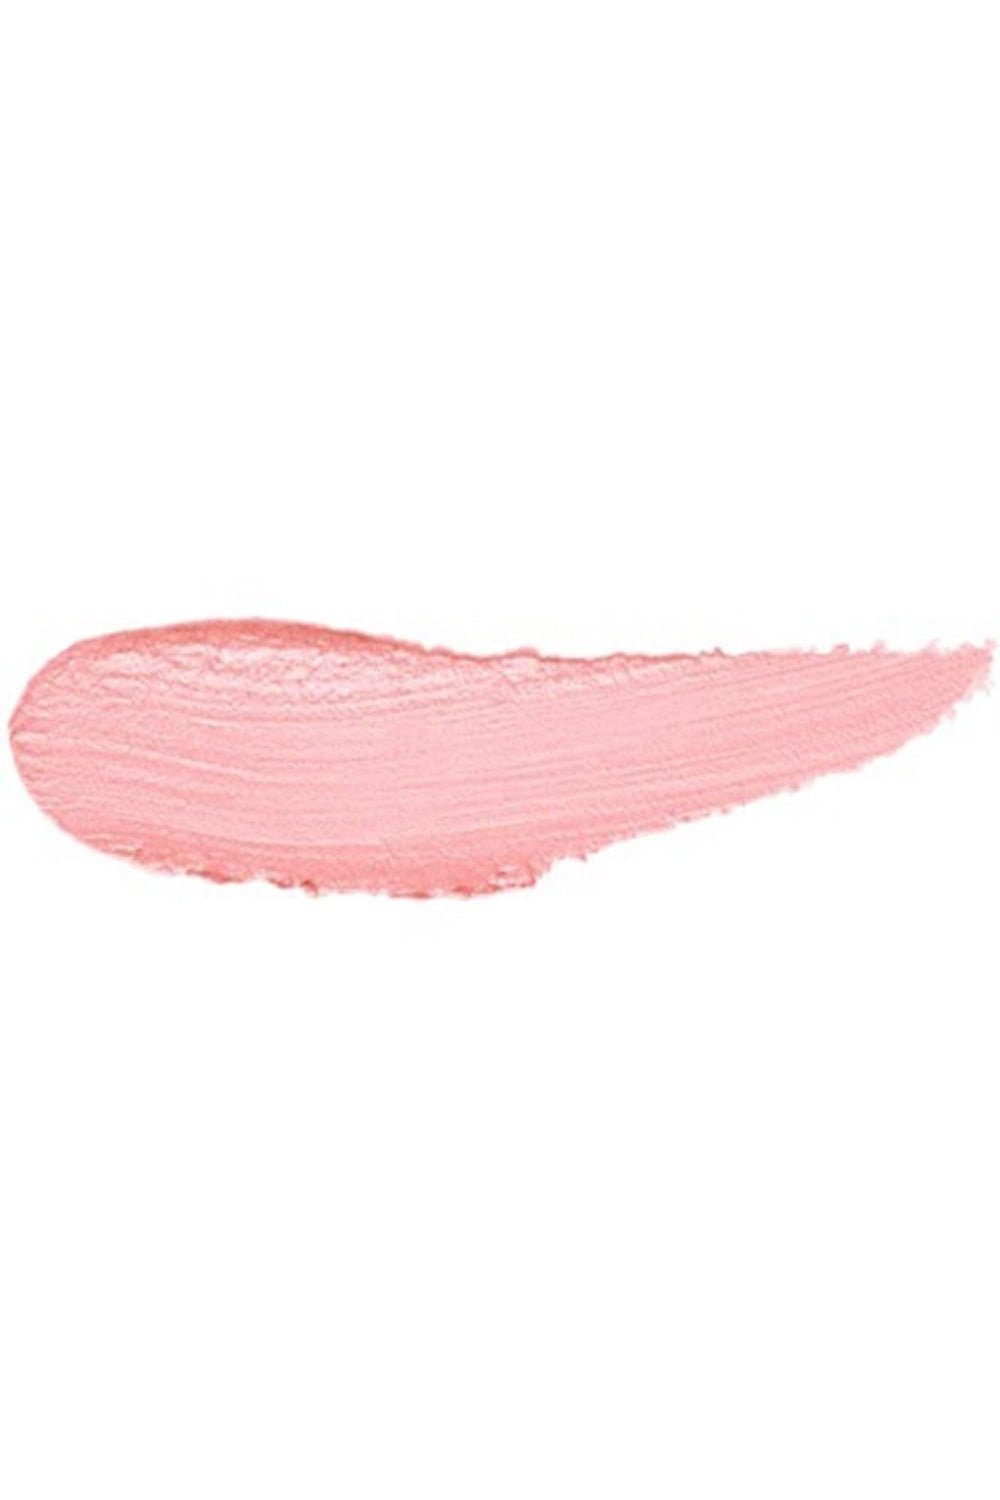 WESTMAN ATELIER-Peau de Rose Super Loaded Tinted Highlight-ROSE